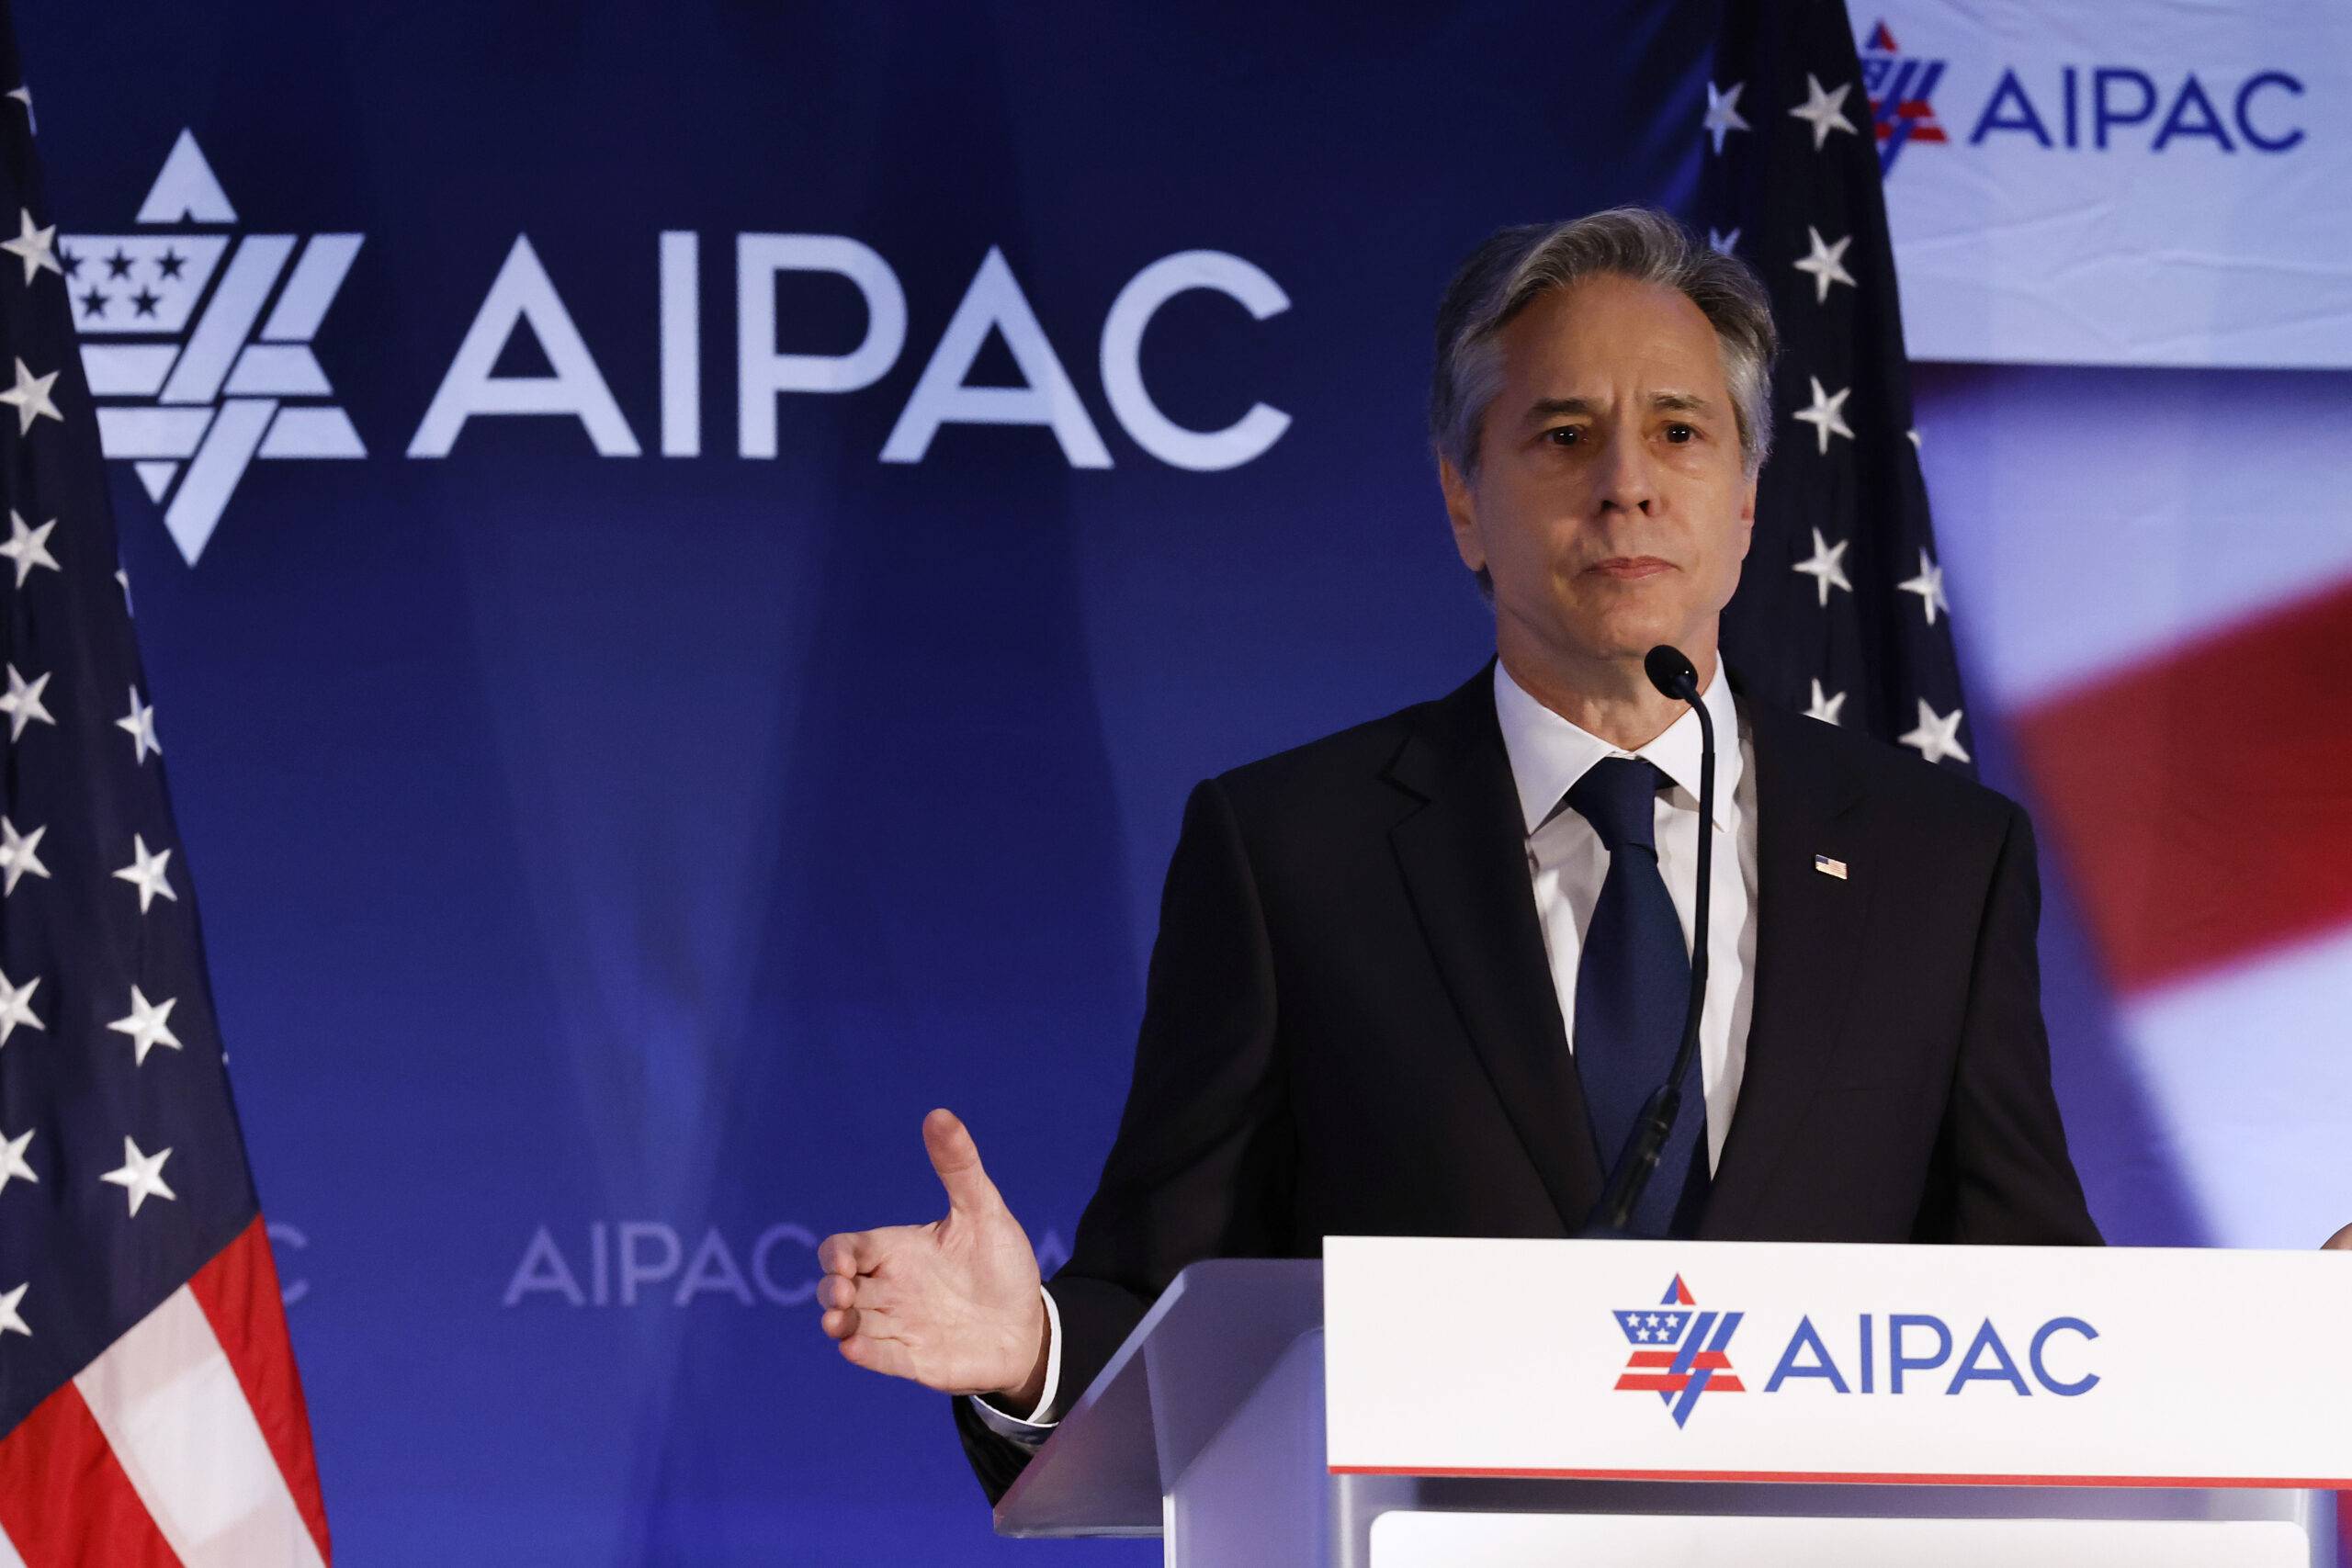 Secretary Of State Blinken Speaks At The AIPAC Summit In Washington, D.C.